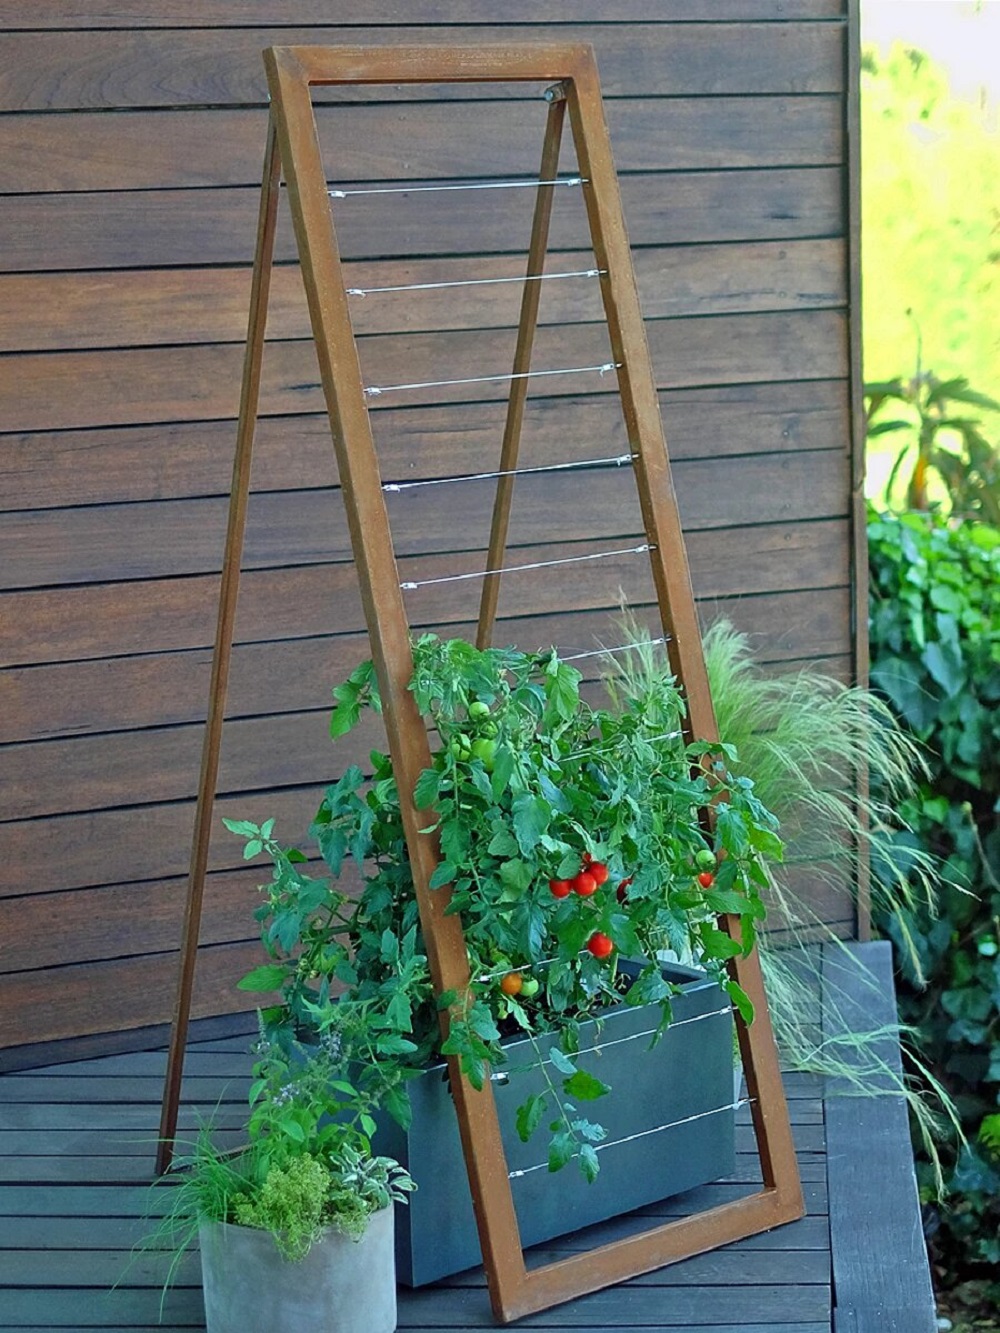 deck_modern_tomato_trellis_Mira_garden-1-1 Garden trellis ideas that are inexpensive and look great